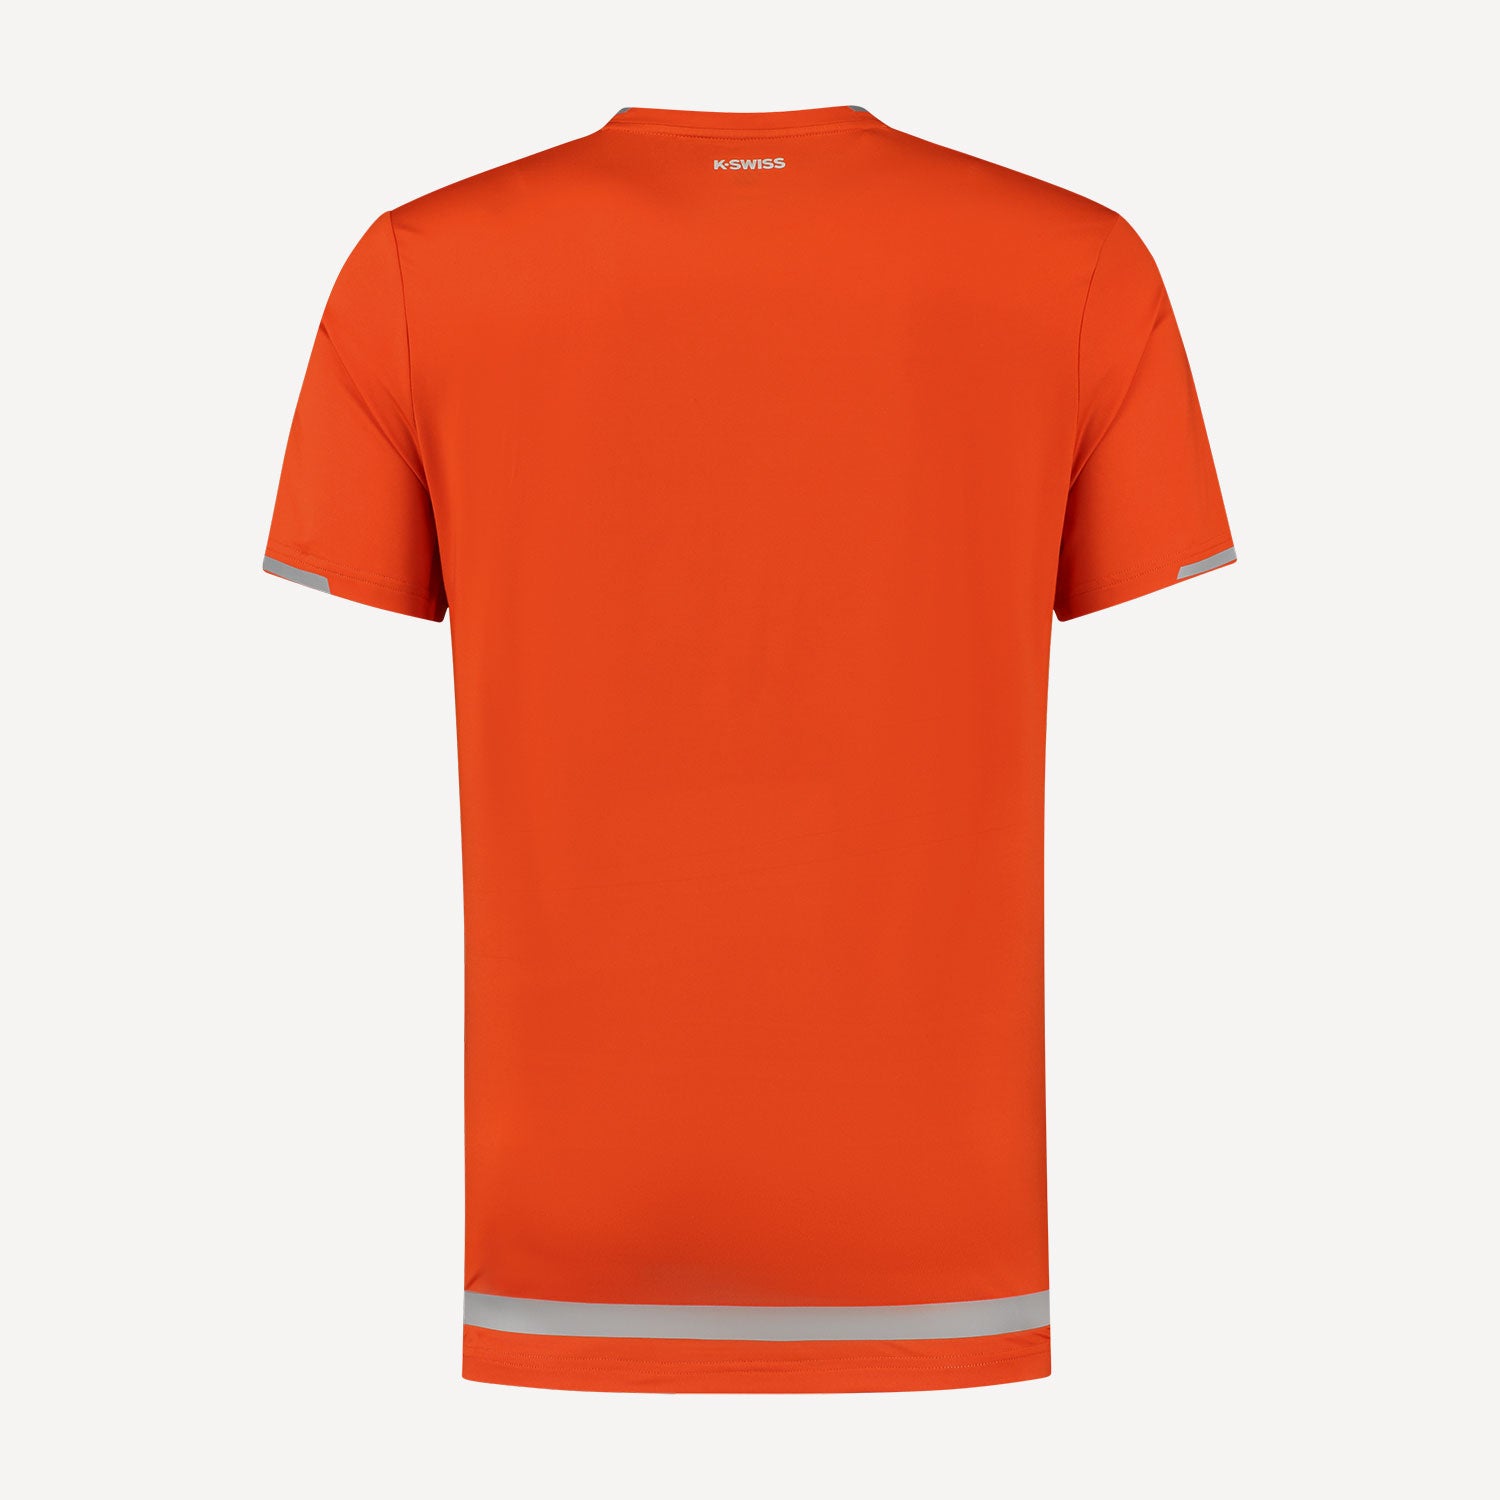 K-Swiss Hypercourt Shield Men's Tennis Shirt Orange (2)